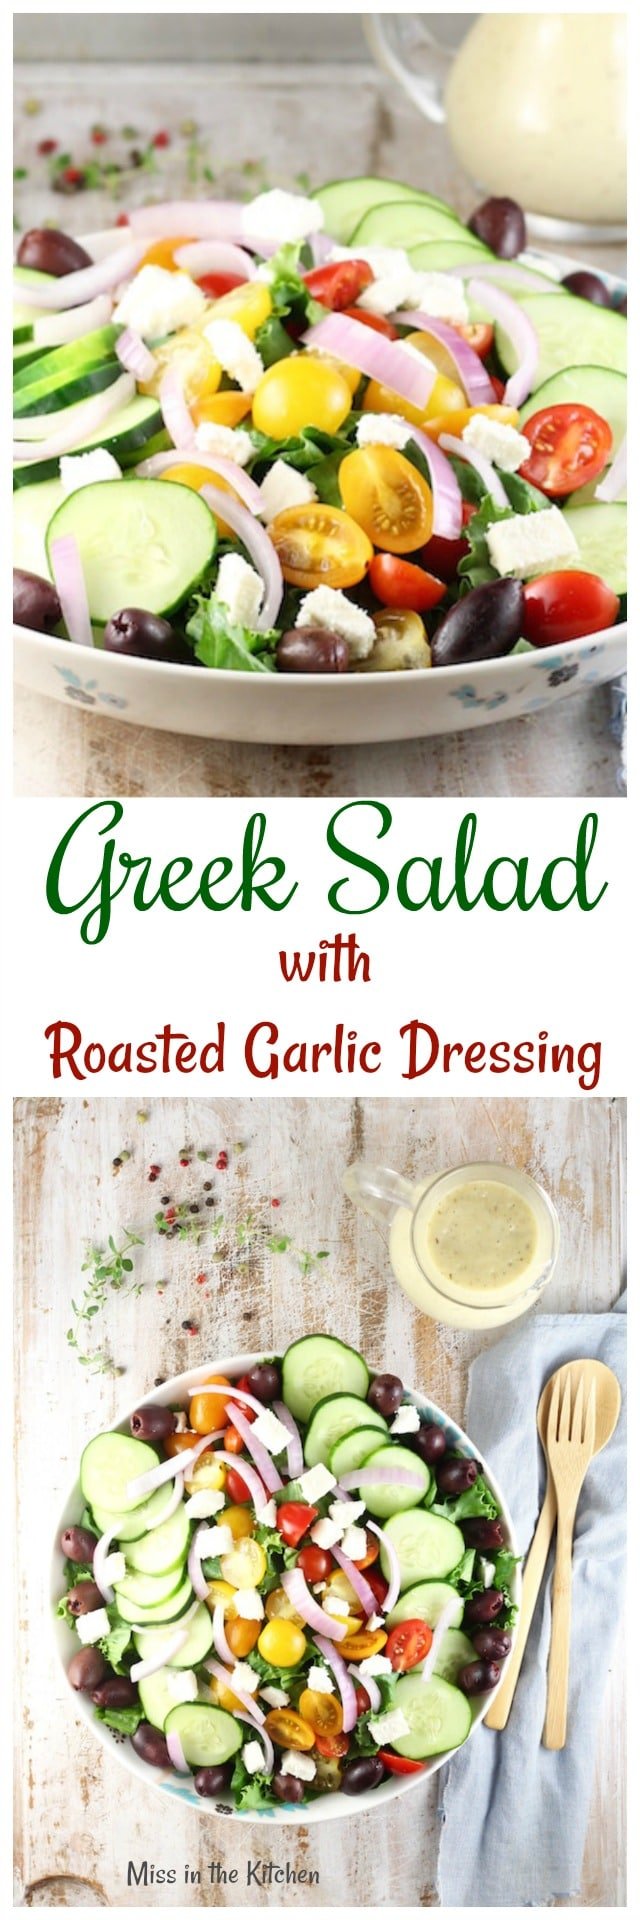 Greek Salad with Roasted Garlic Salad Dressing Recipe from MissintheKitchen.com